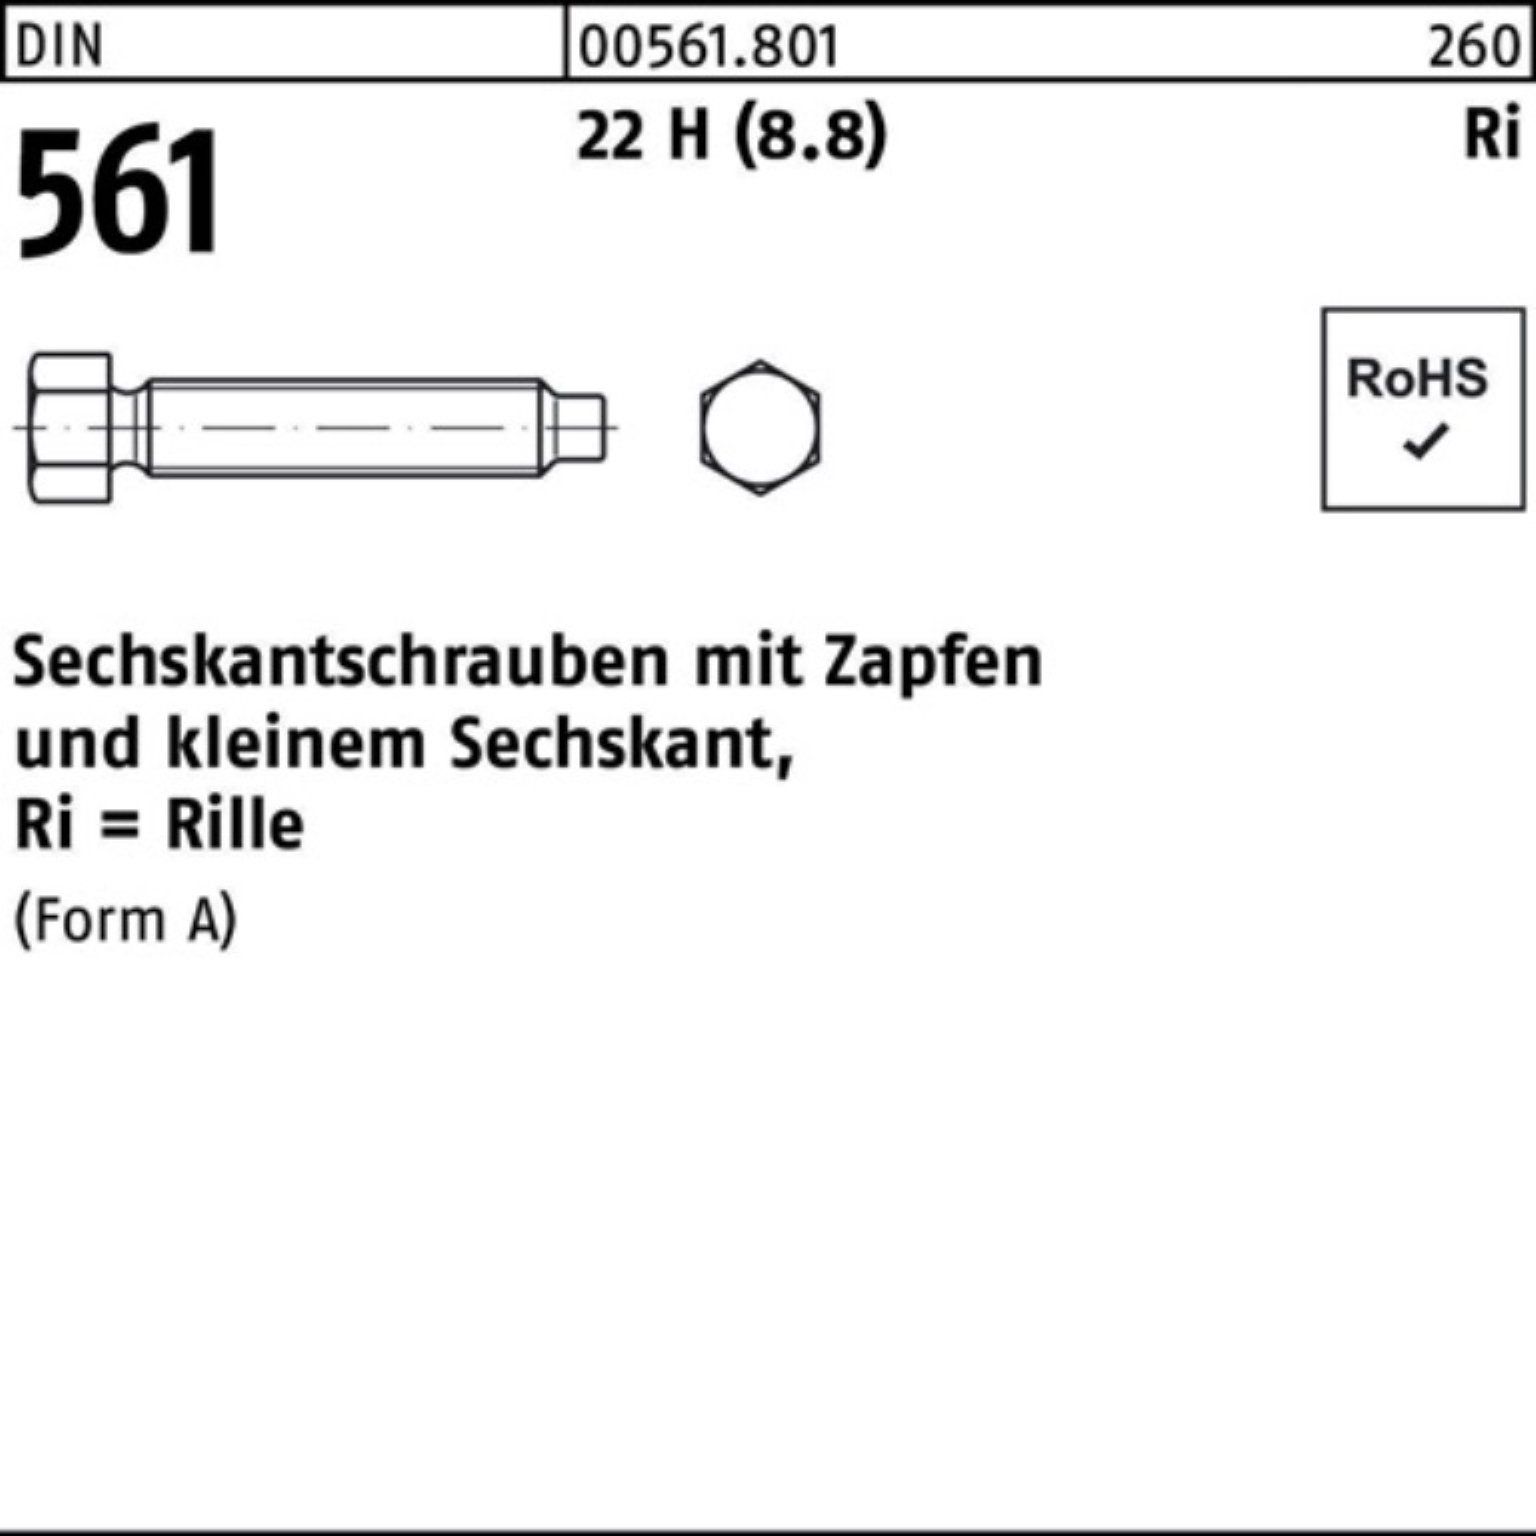 Reyher Sechskantschraube 100er Zapfen Pack AM 1 St 561 DIN 24x 22 H 100 (8.8) Sechskantschraube